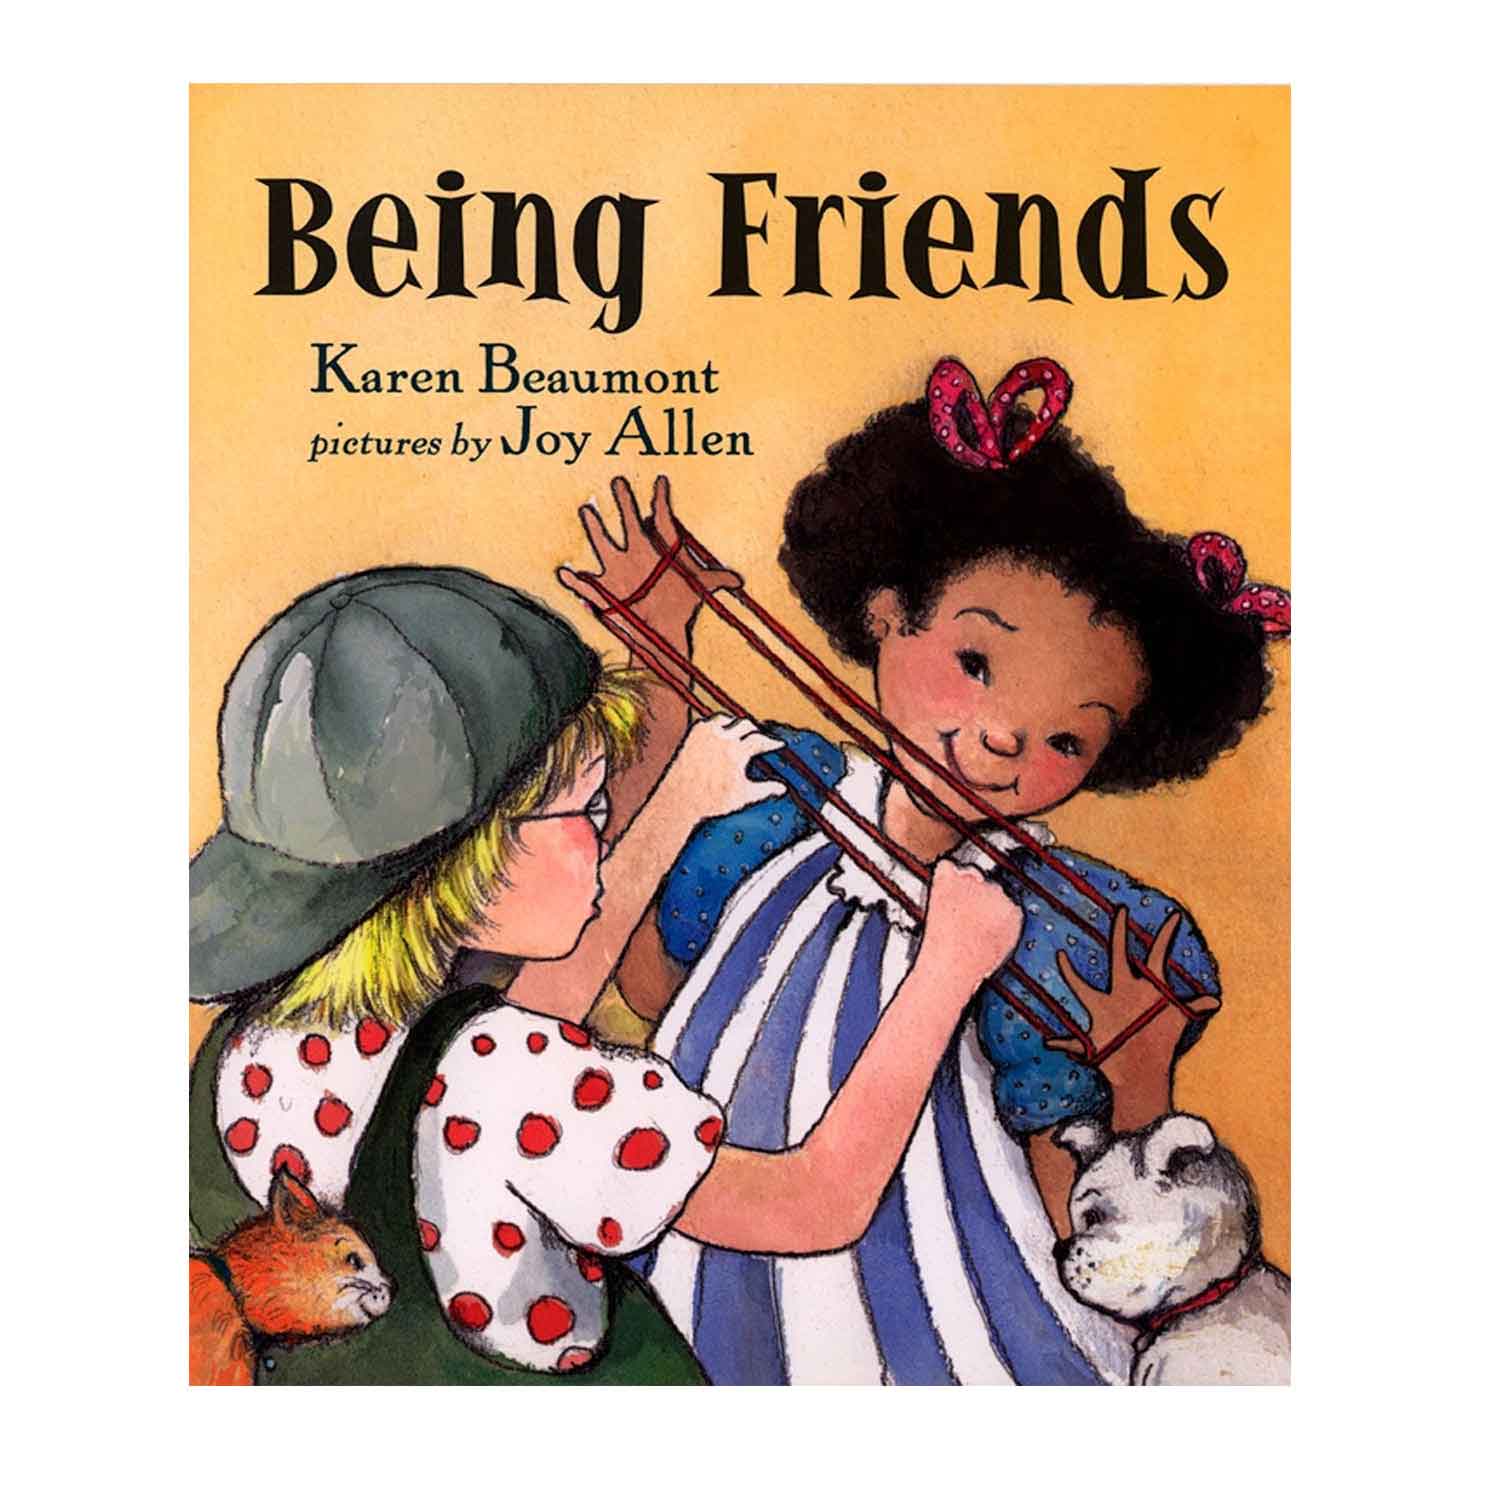 Books and friends. Friendship book.